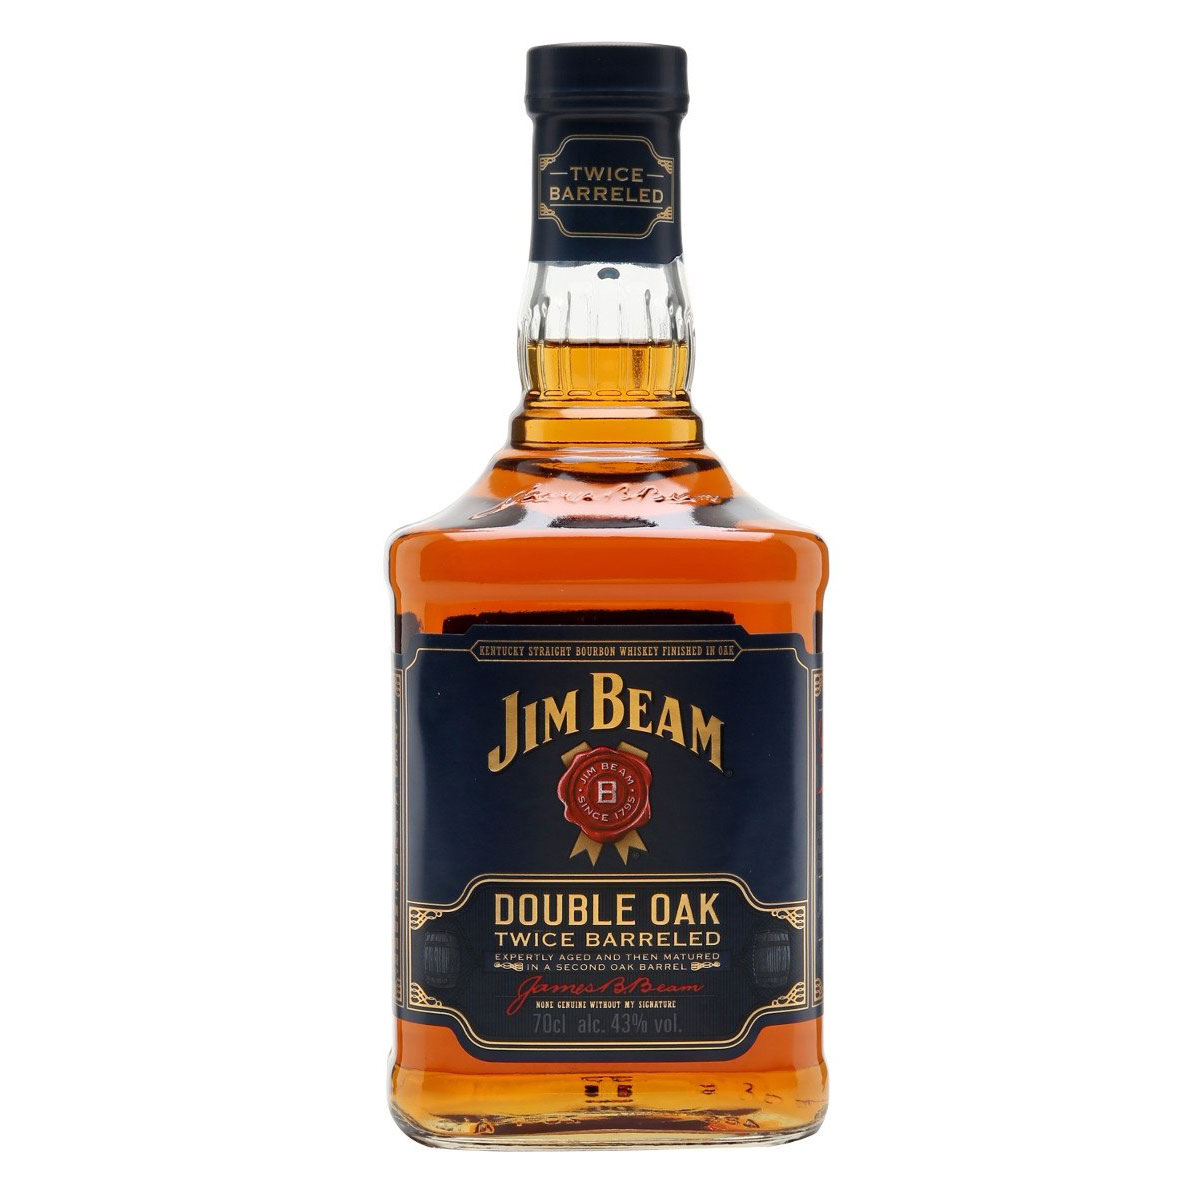 a bottle of jim beam double oak whisky